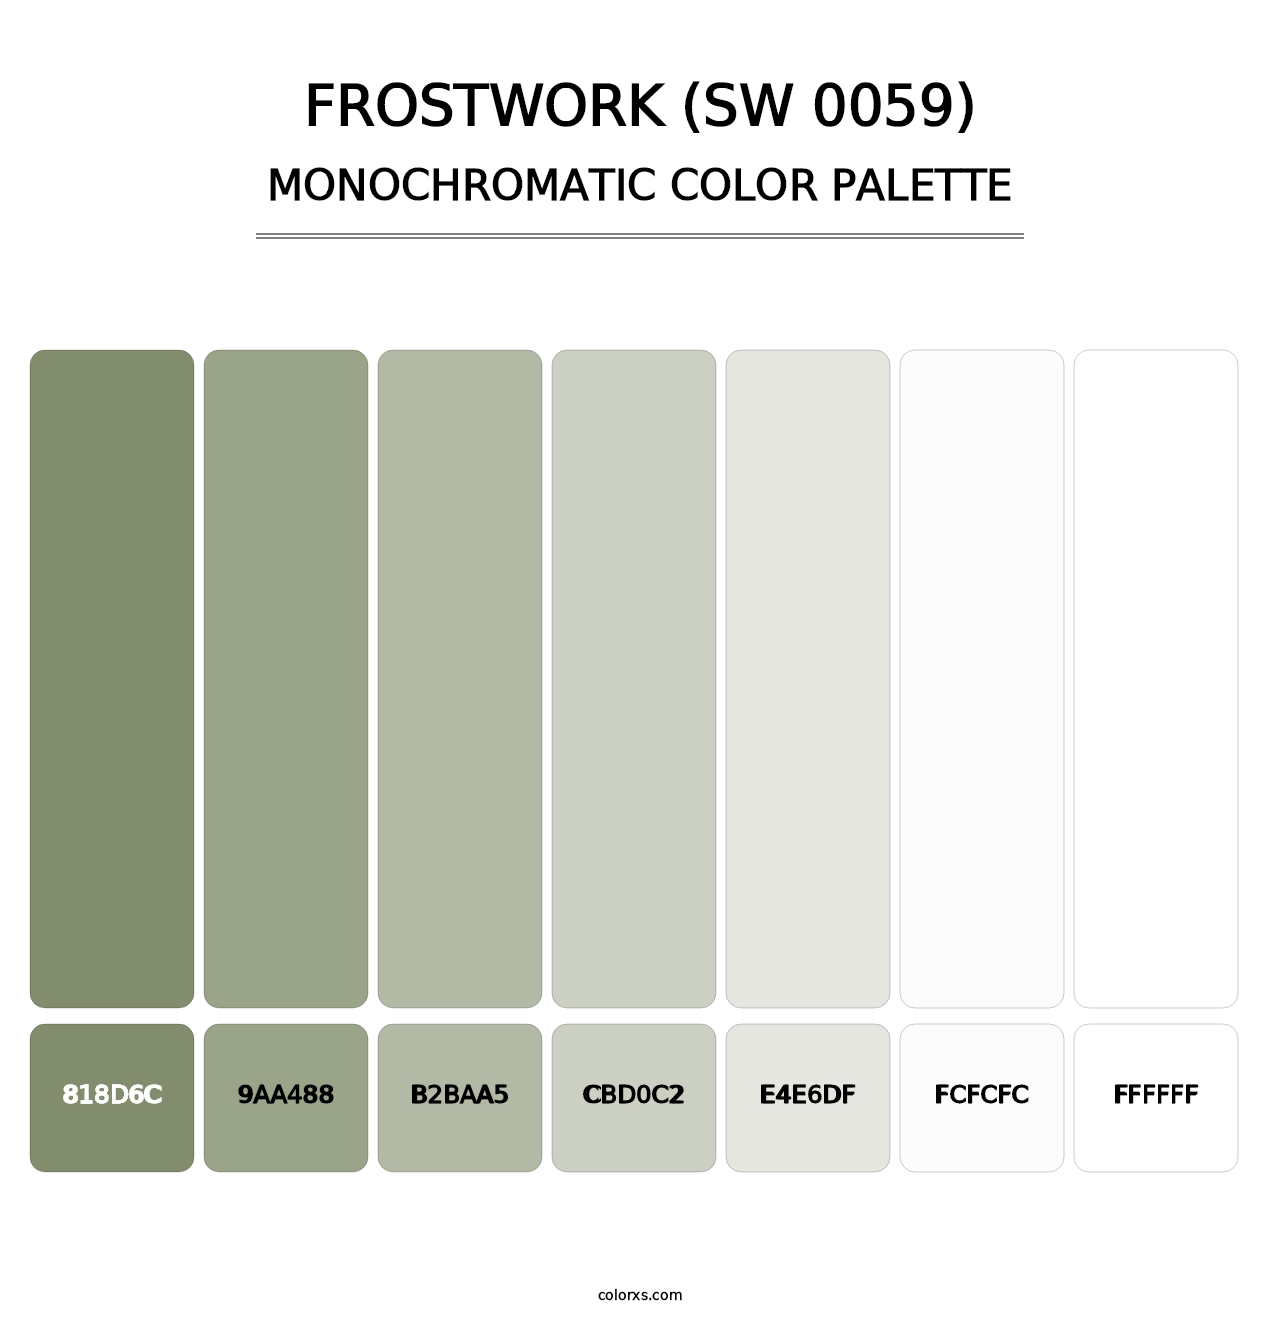 Frostwork (SW 0059) - Monochromatic Color Palette